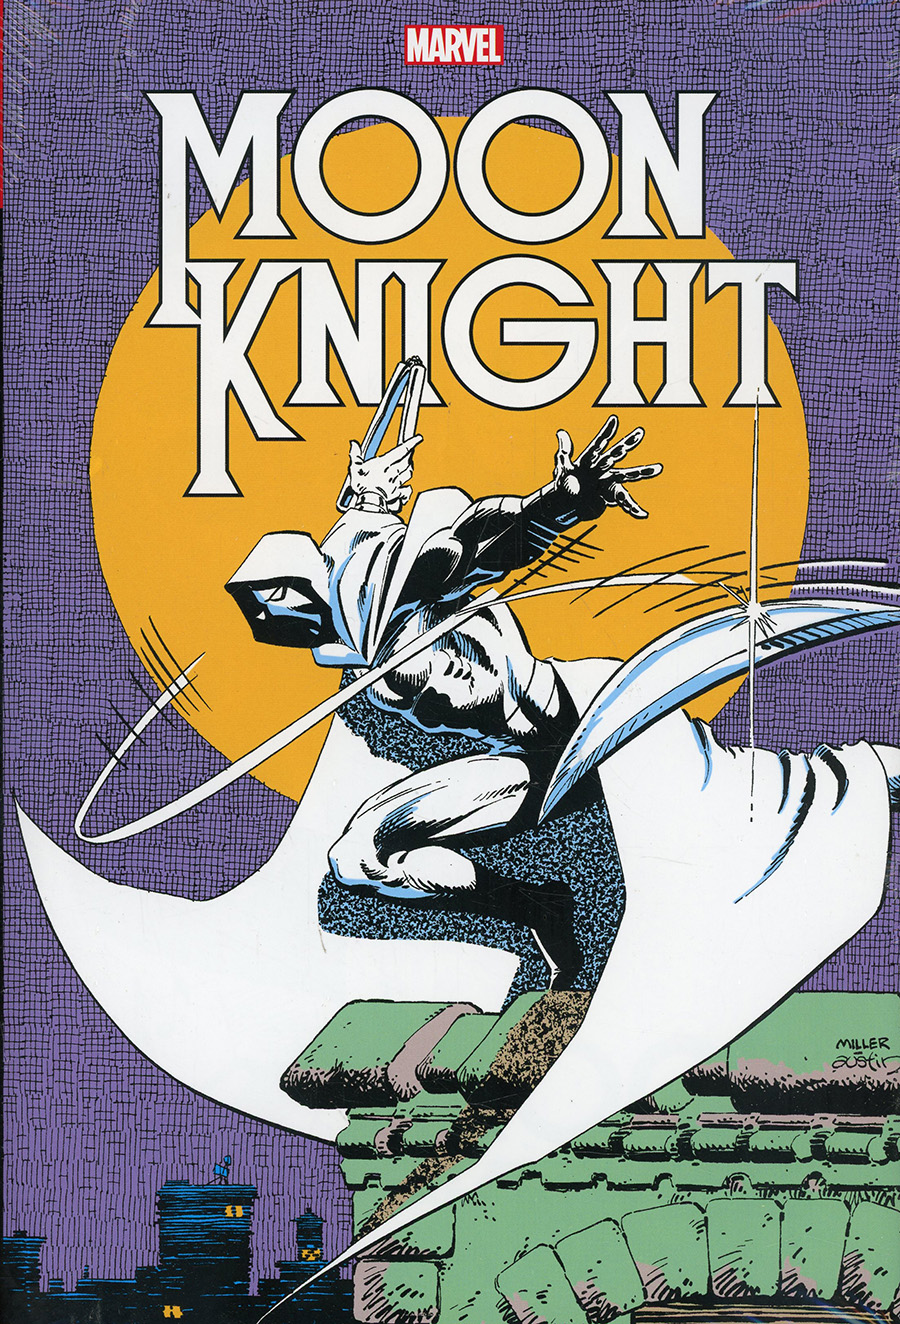 Moon Knight Omnibus Vol 2 HC Direct Market Frank Miller Variant Cover